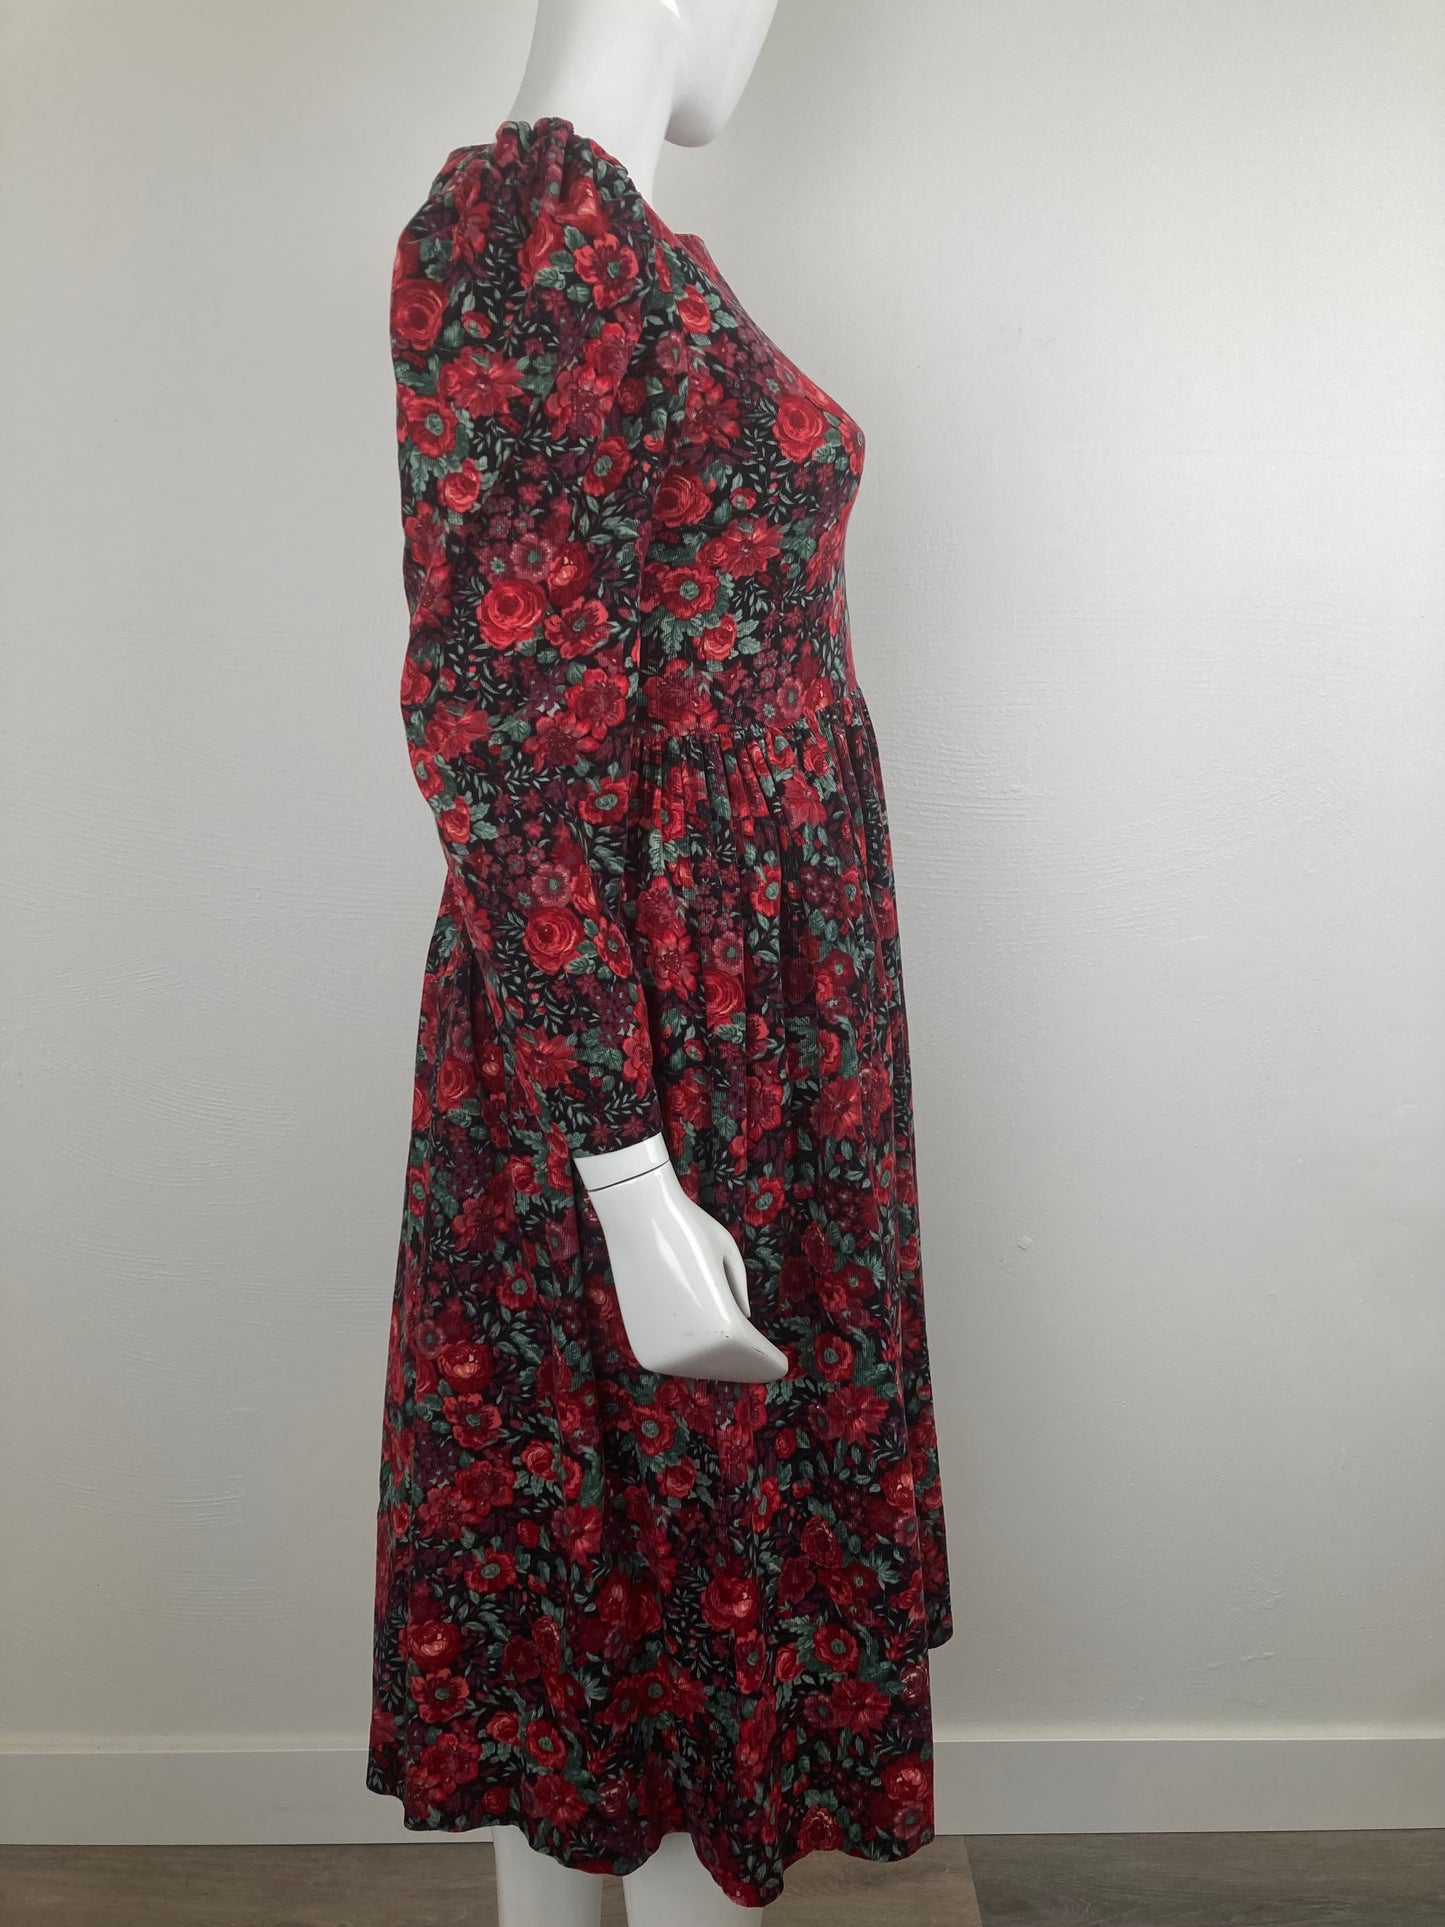 1980s Laura Ashley Printed Corduroy Dress, Size M (10)